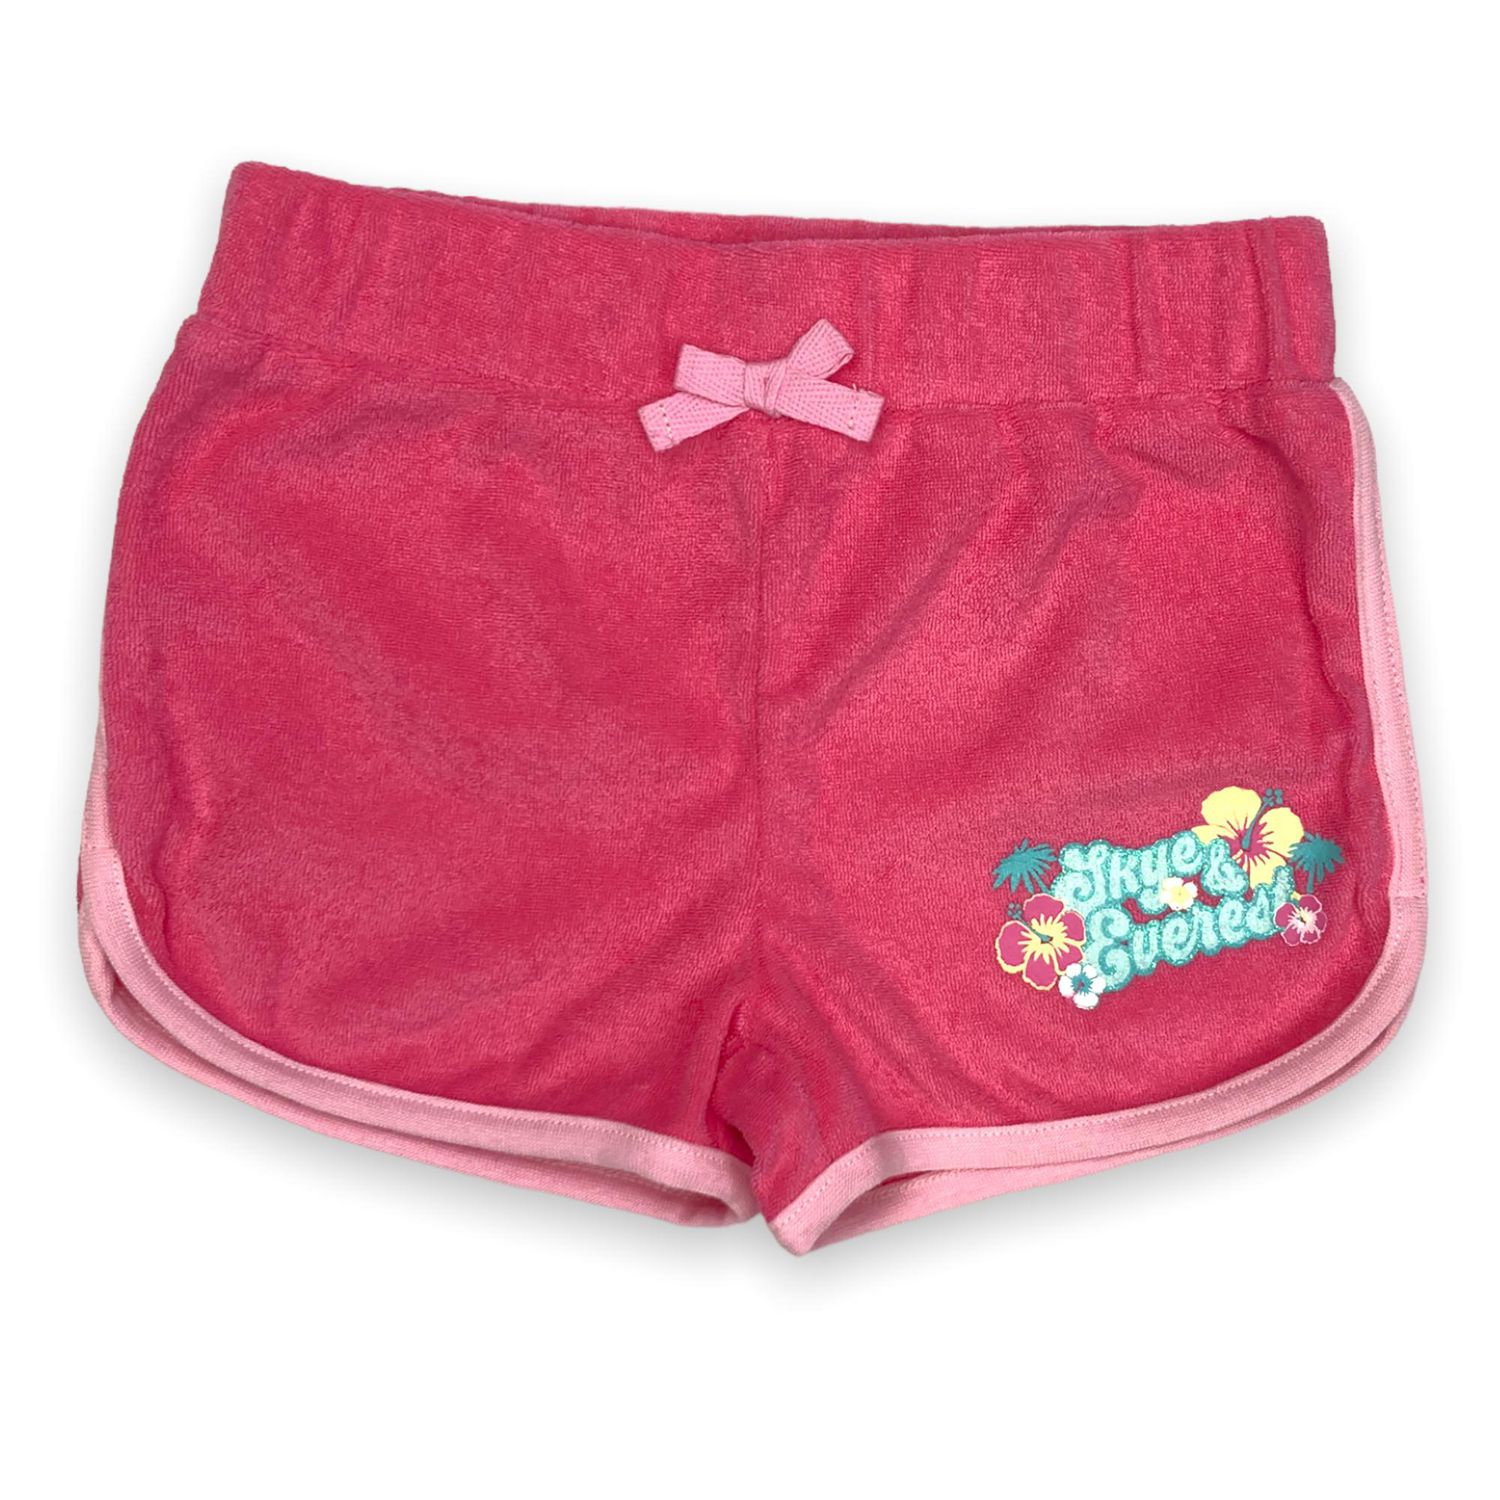 Paw Patrol Girl's shorts. Toddler girls short dolphin shorts